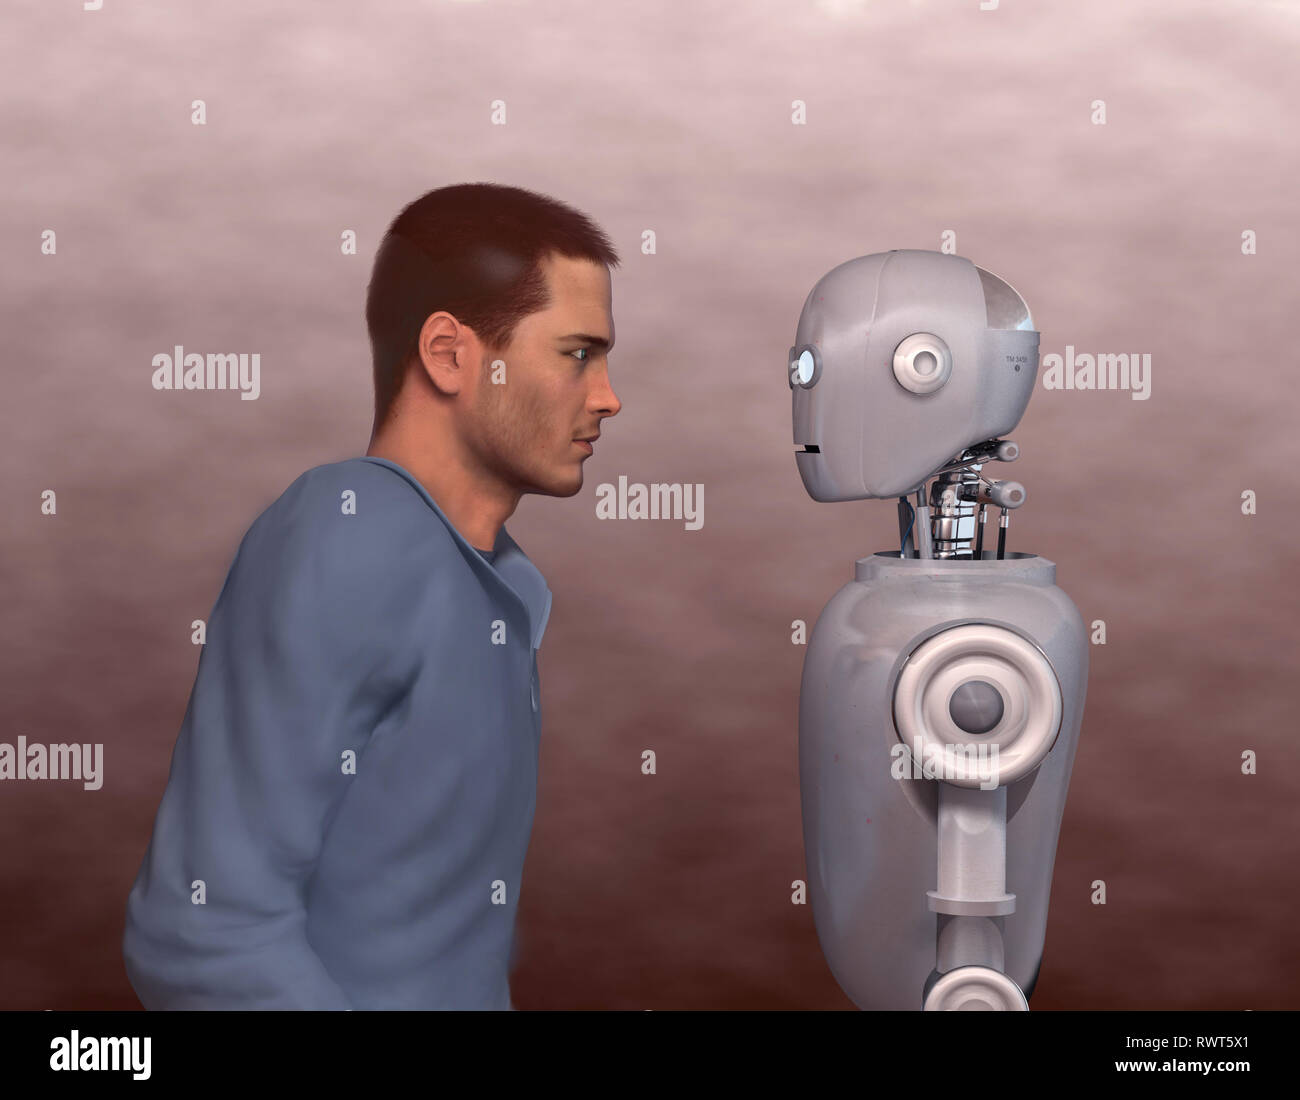 Man and robot Stock Photo